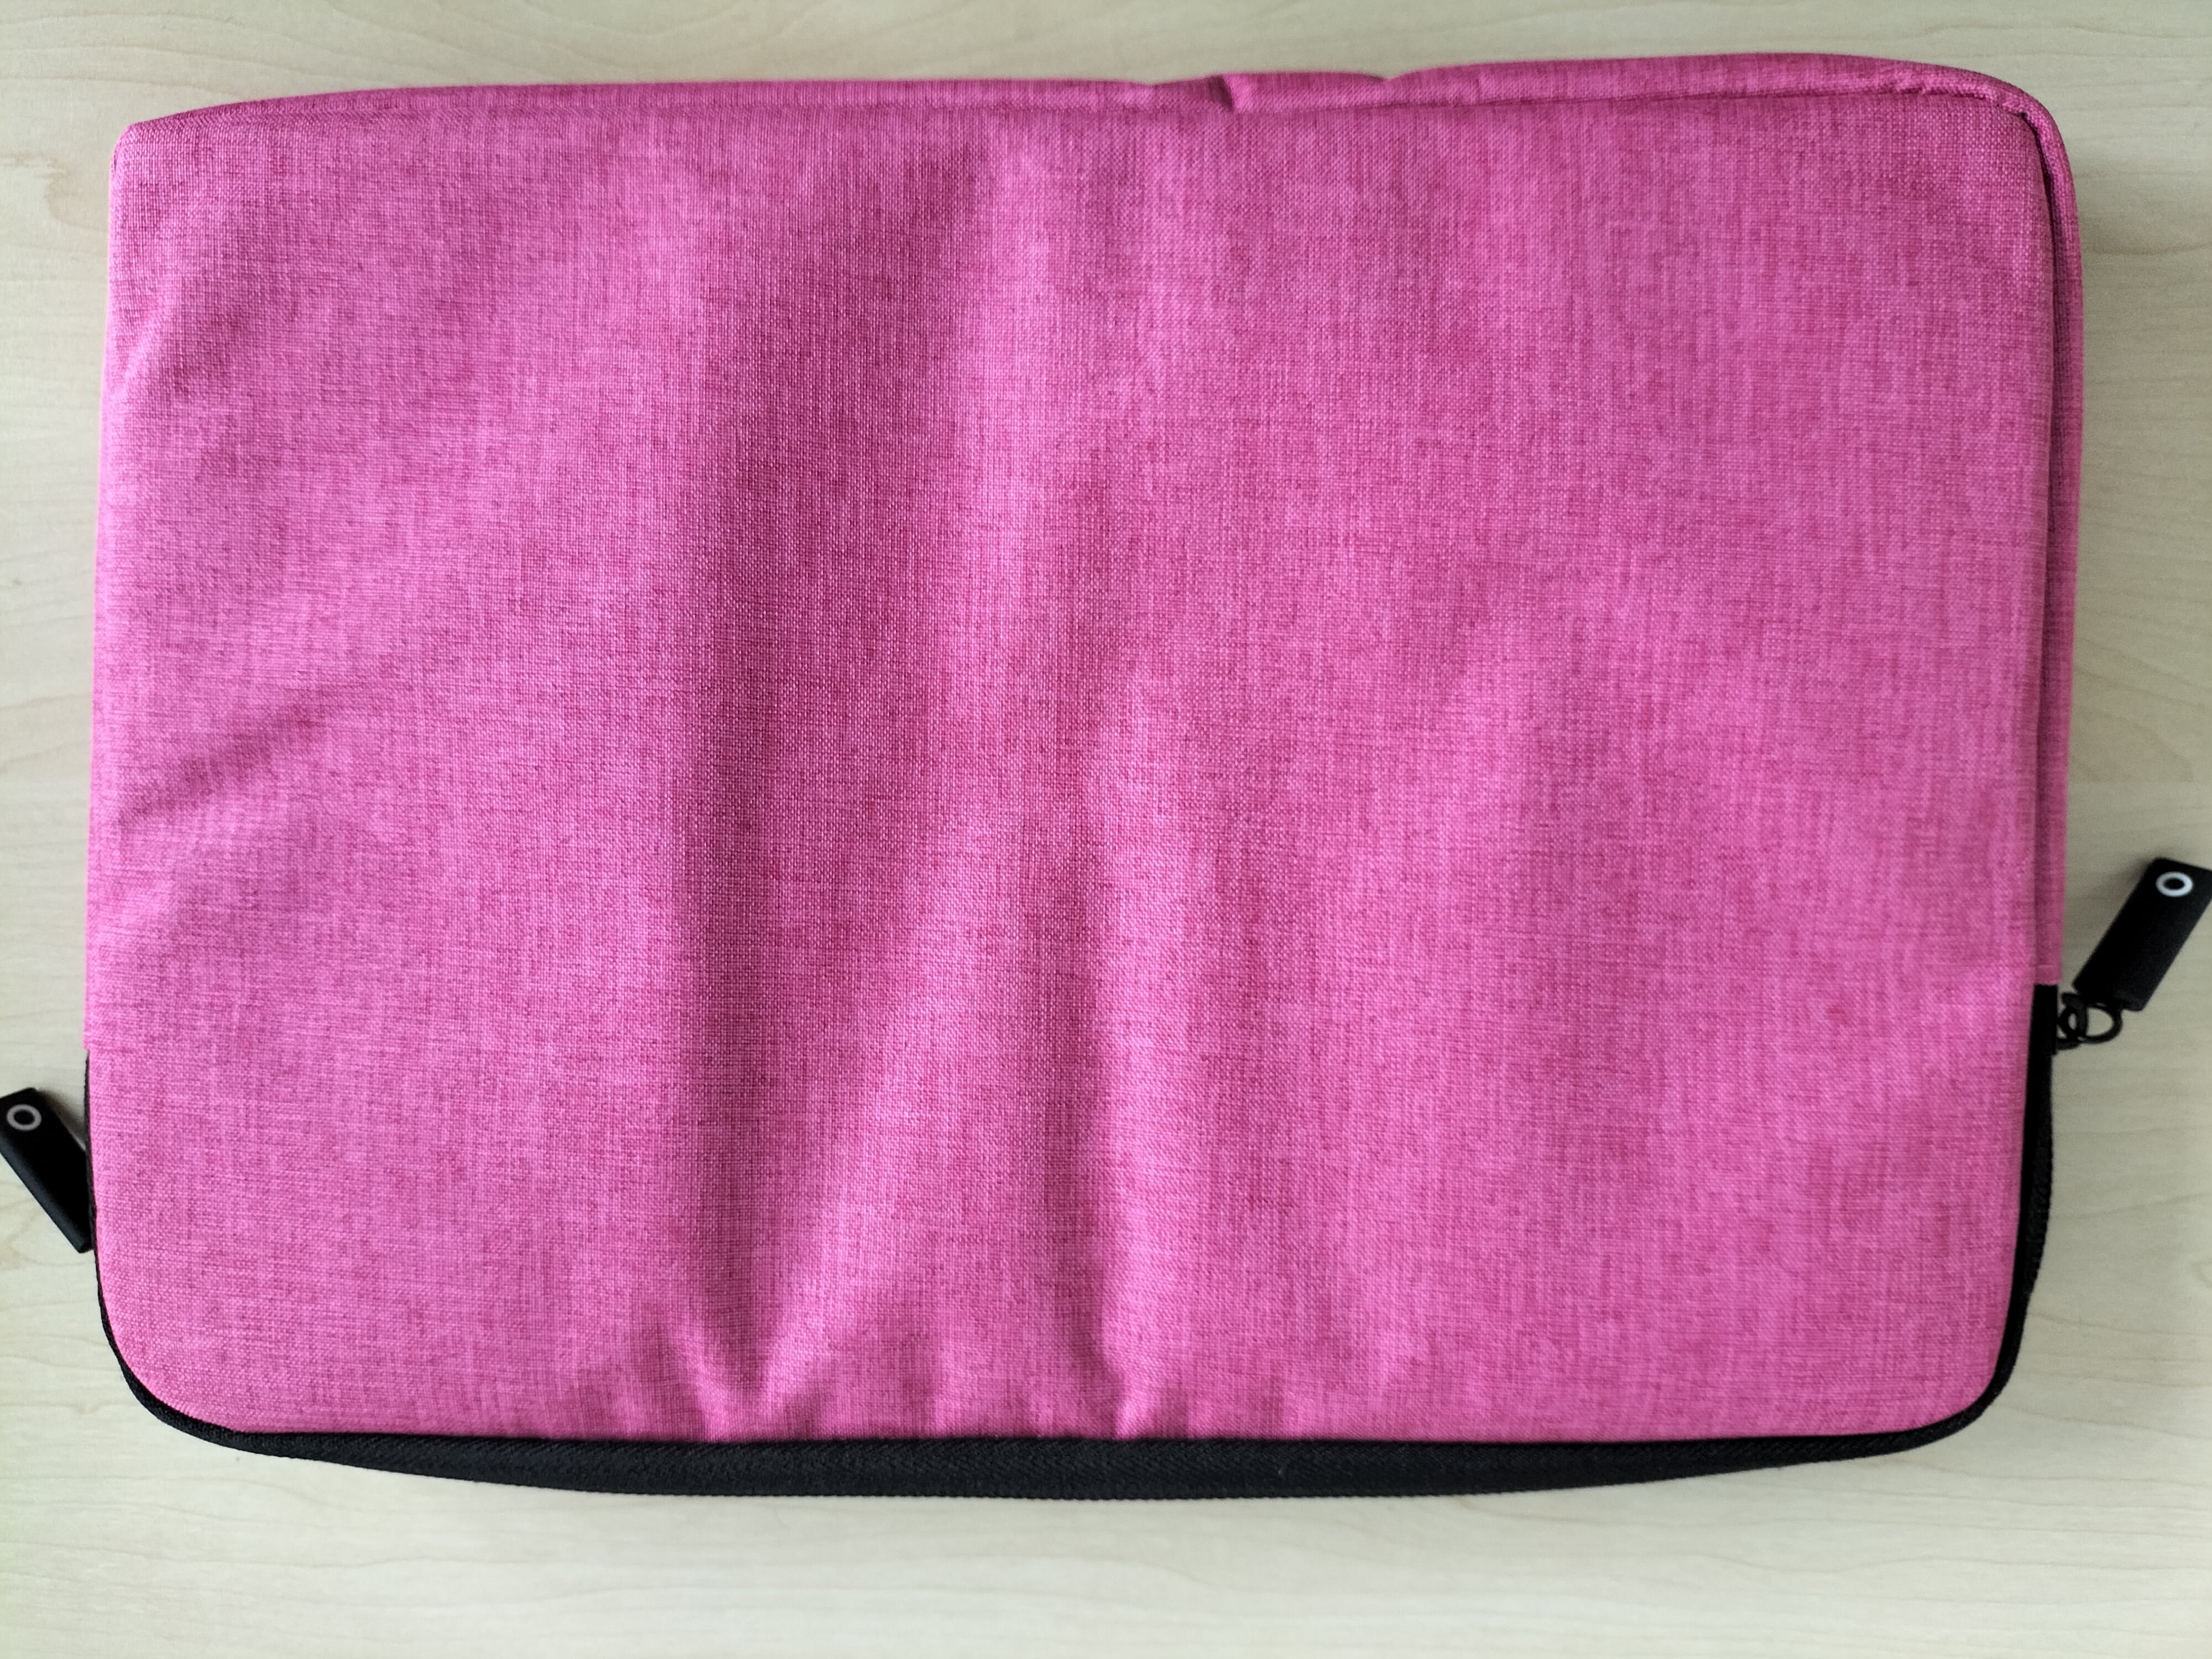 OKADE Laptop/Tablet Tasche - 10 Zoll -11,6 Zoll verschiedene Farben: Pink, Schwarz